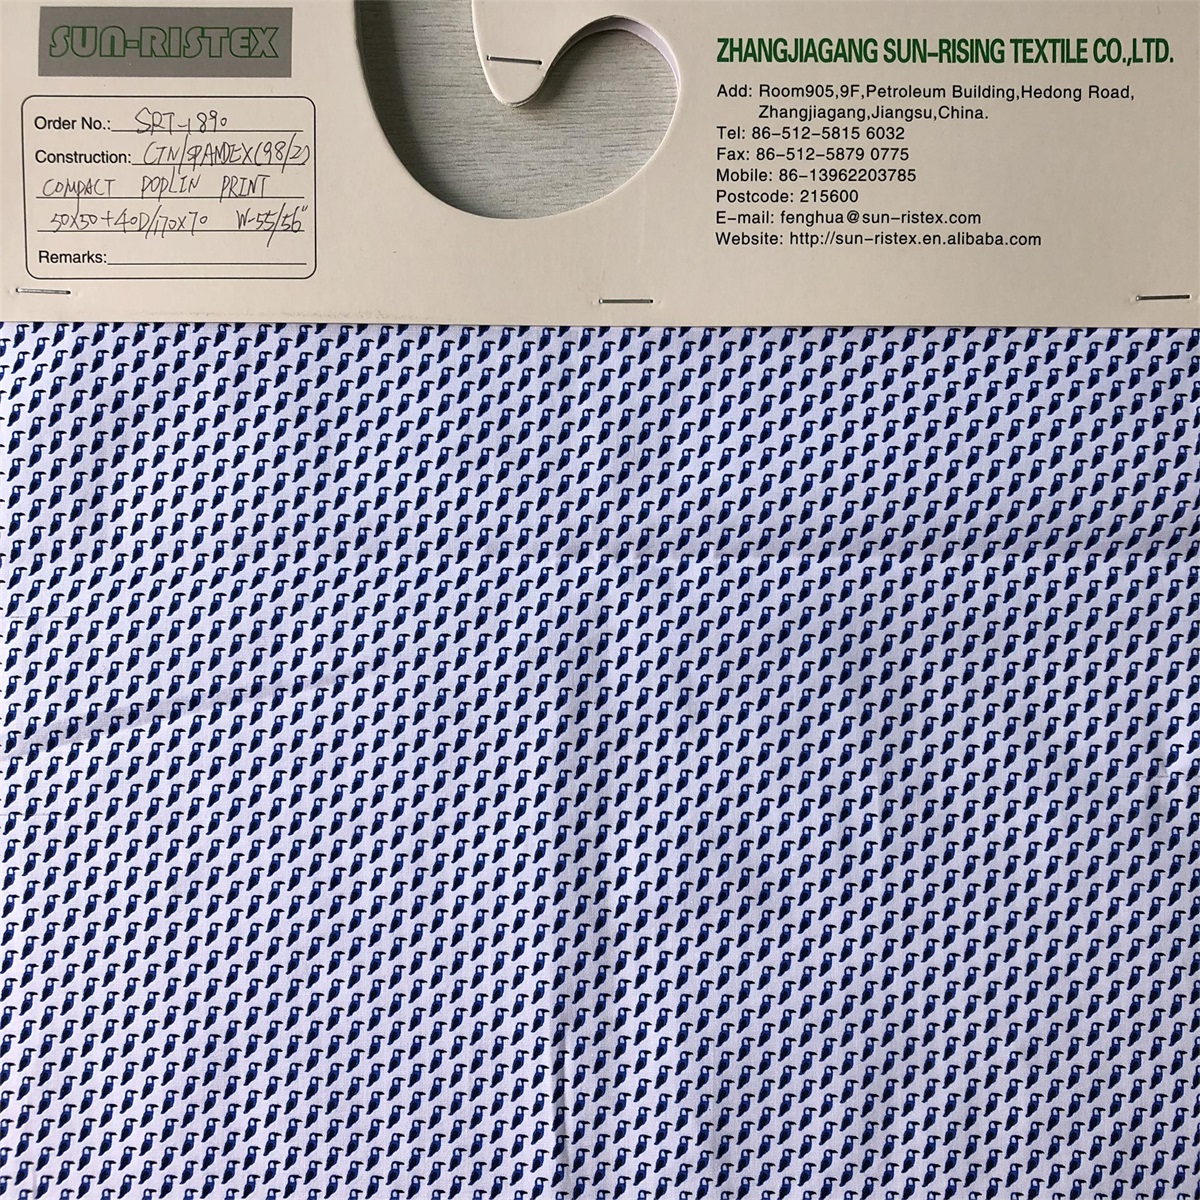 High quality Eco-friendly Spandex Fabric by compact yarn cotton spandex poplin printed shirts woven stretchy fabric